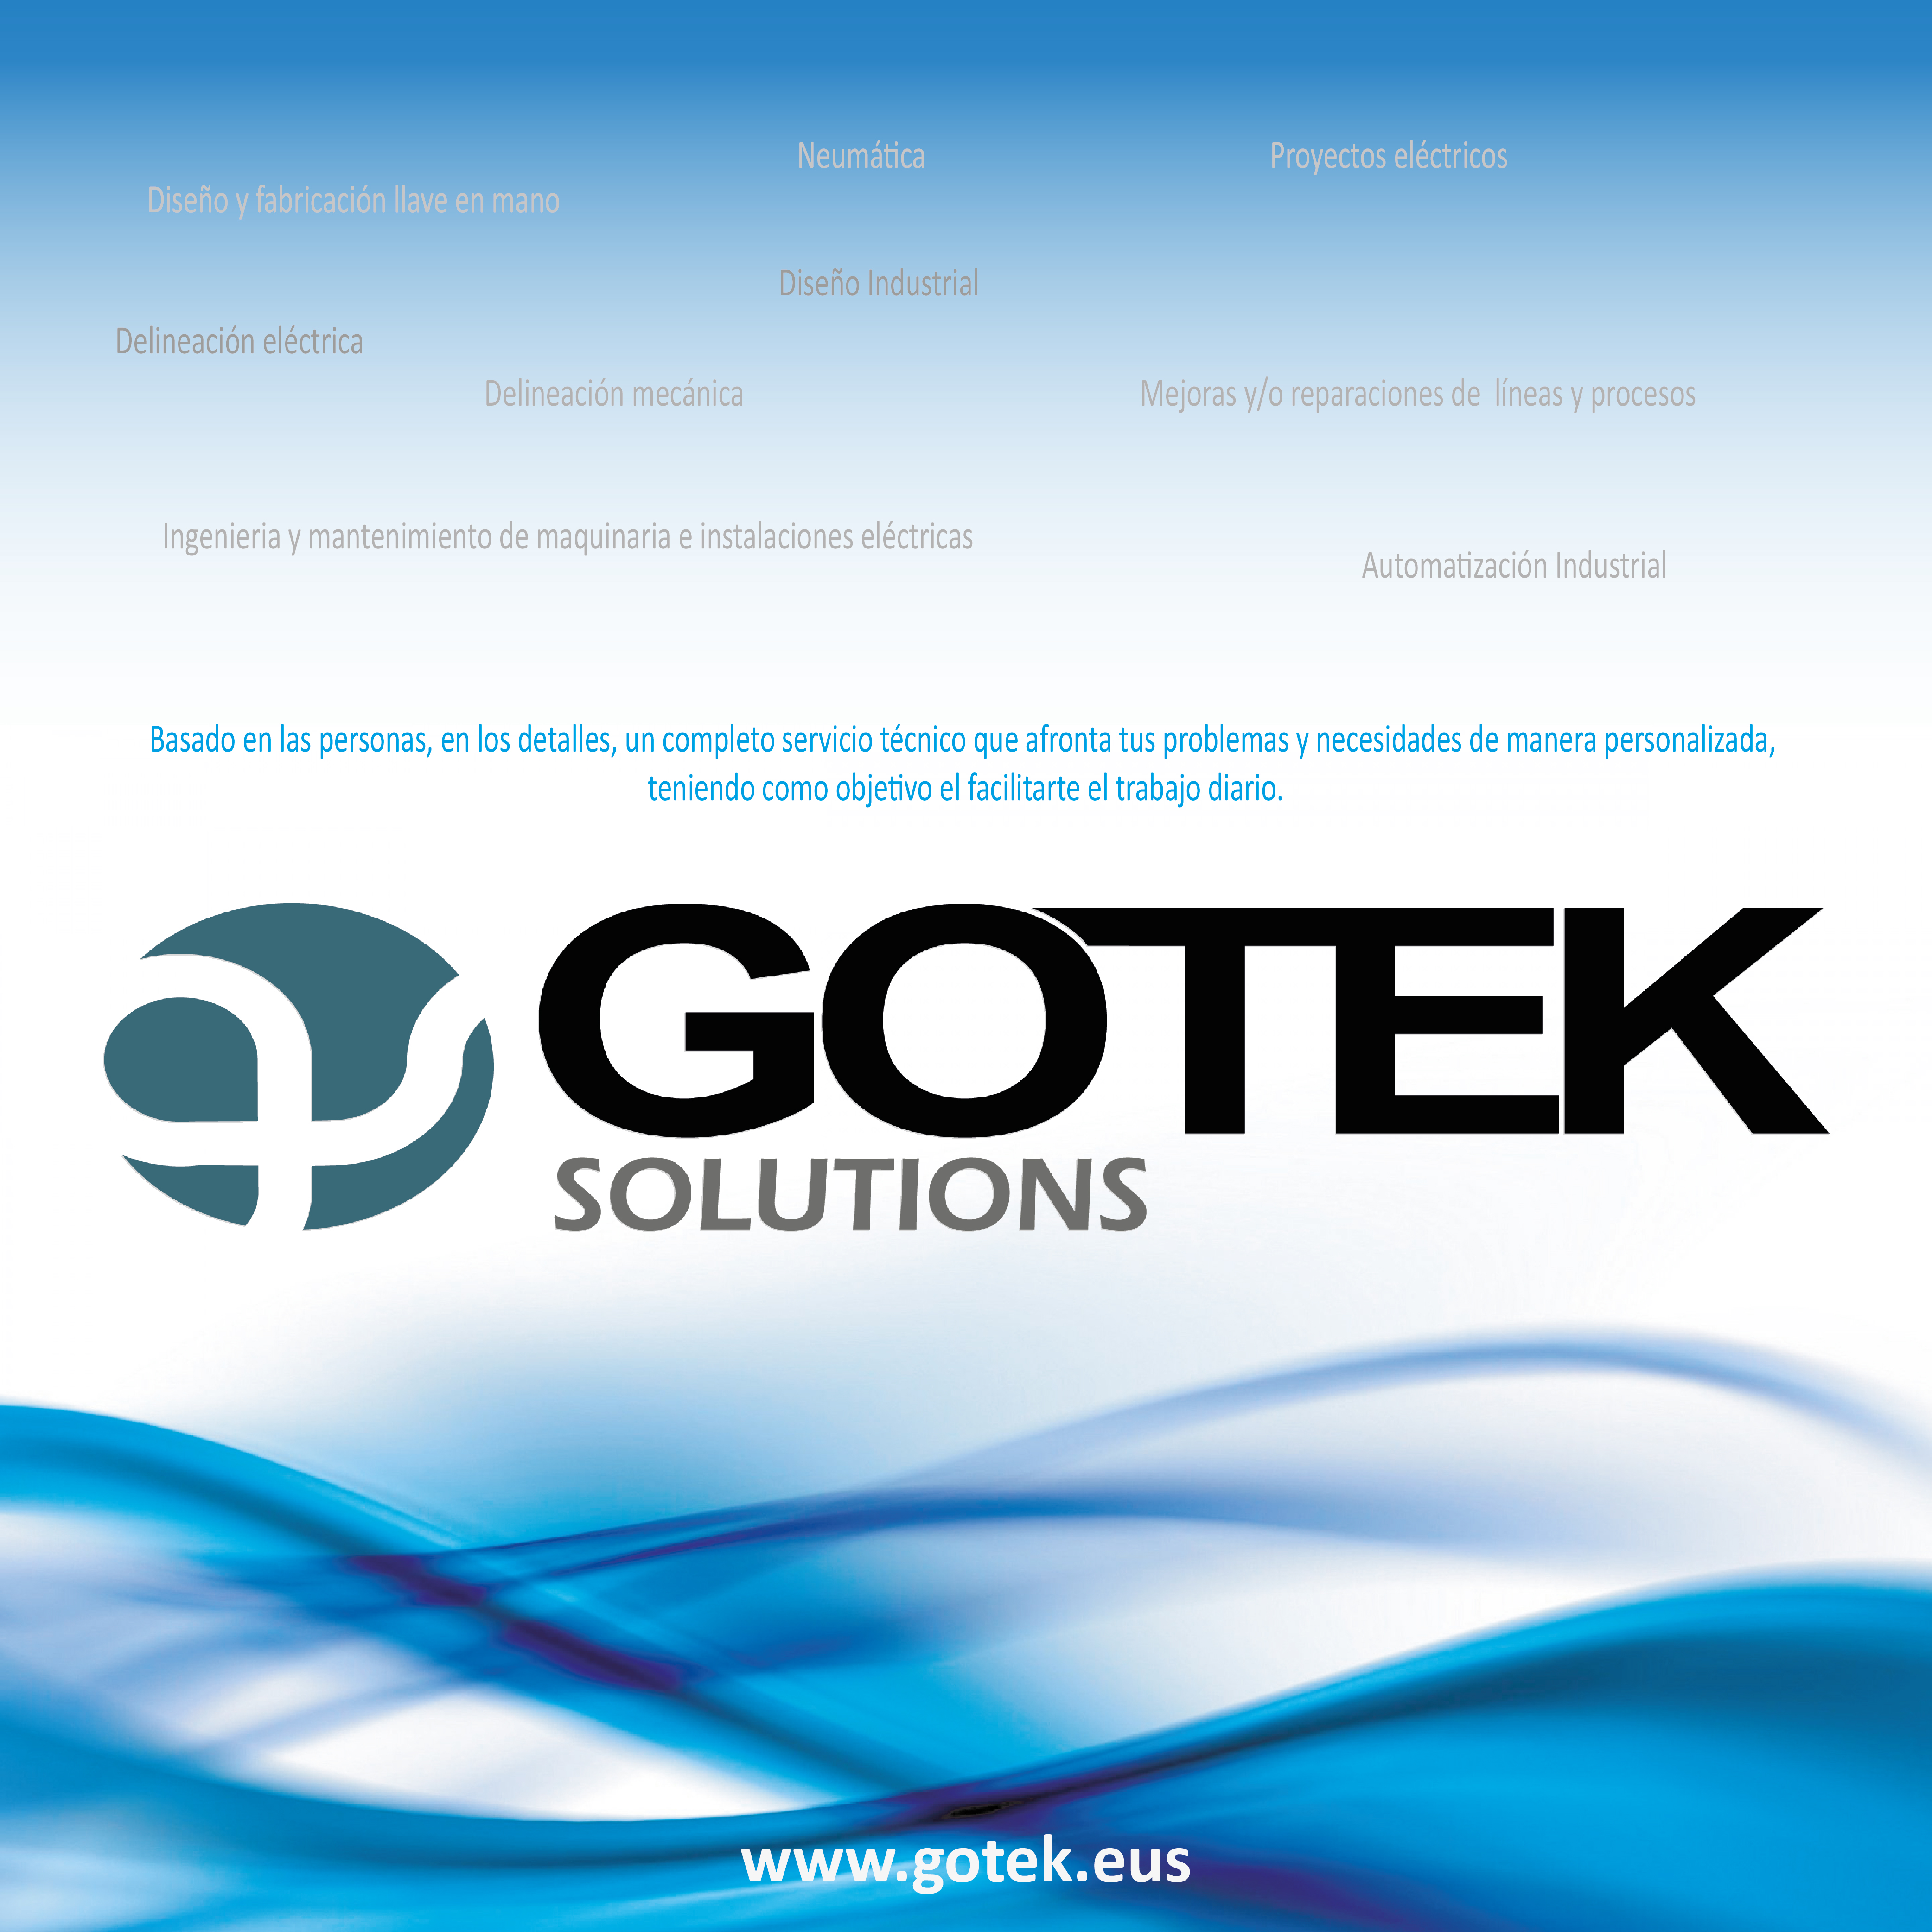 Gotek Solutions